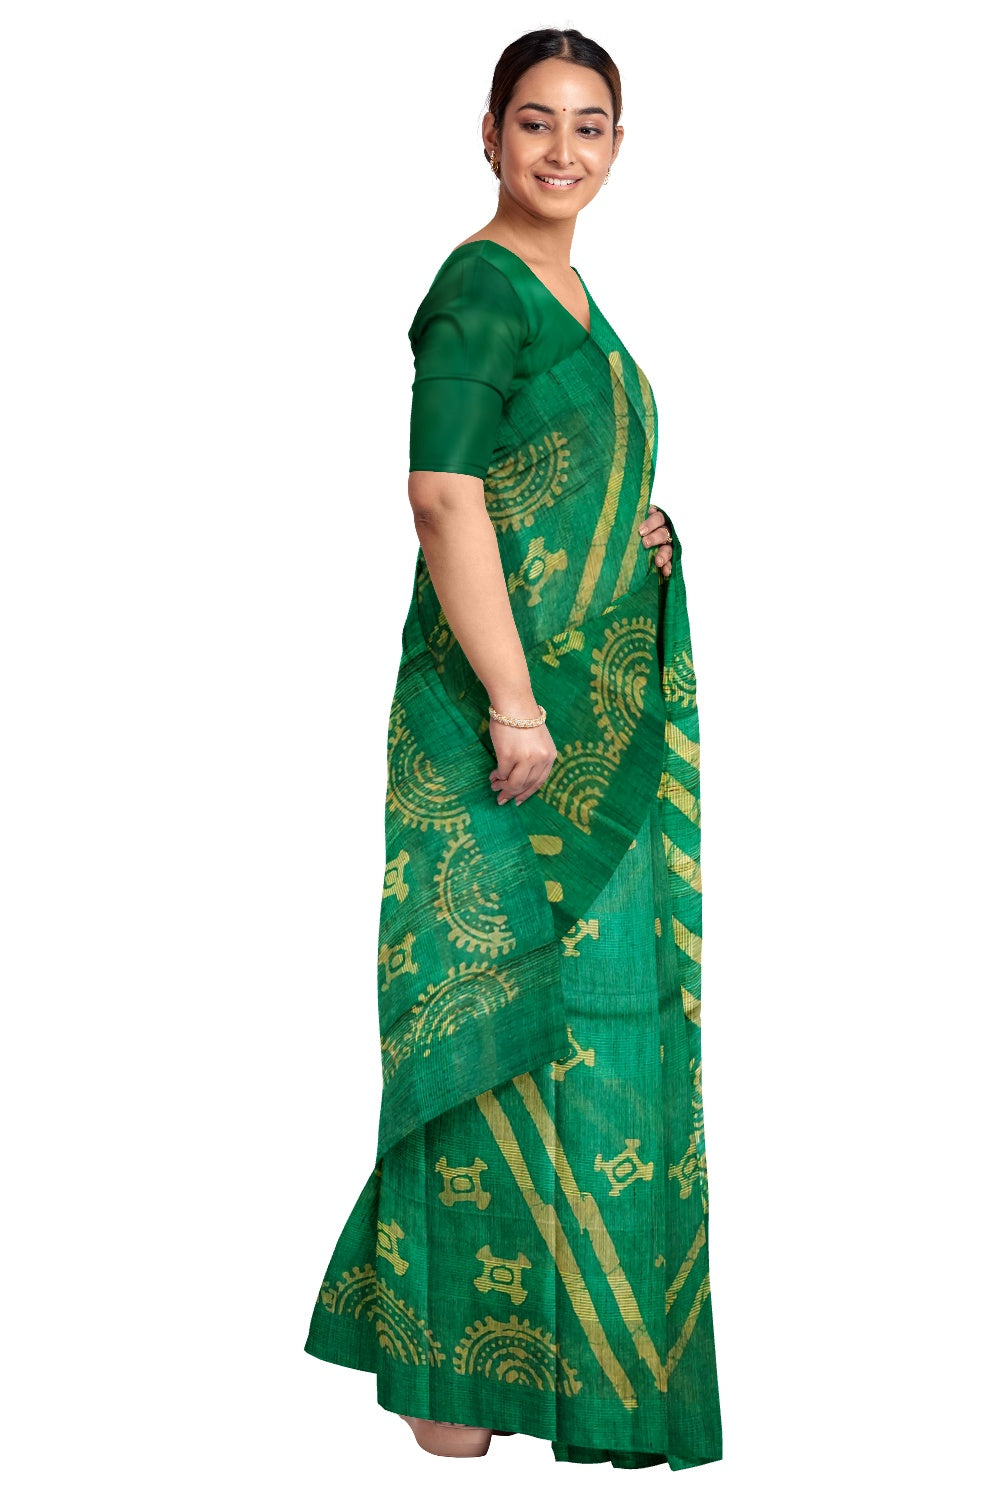 Southloom Cotton Designer Green Saree with Baswara Print